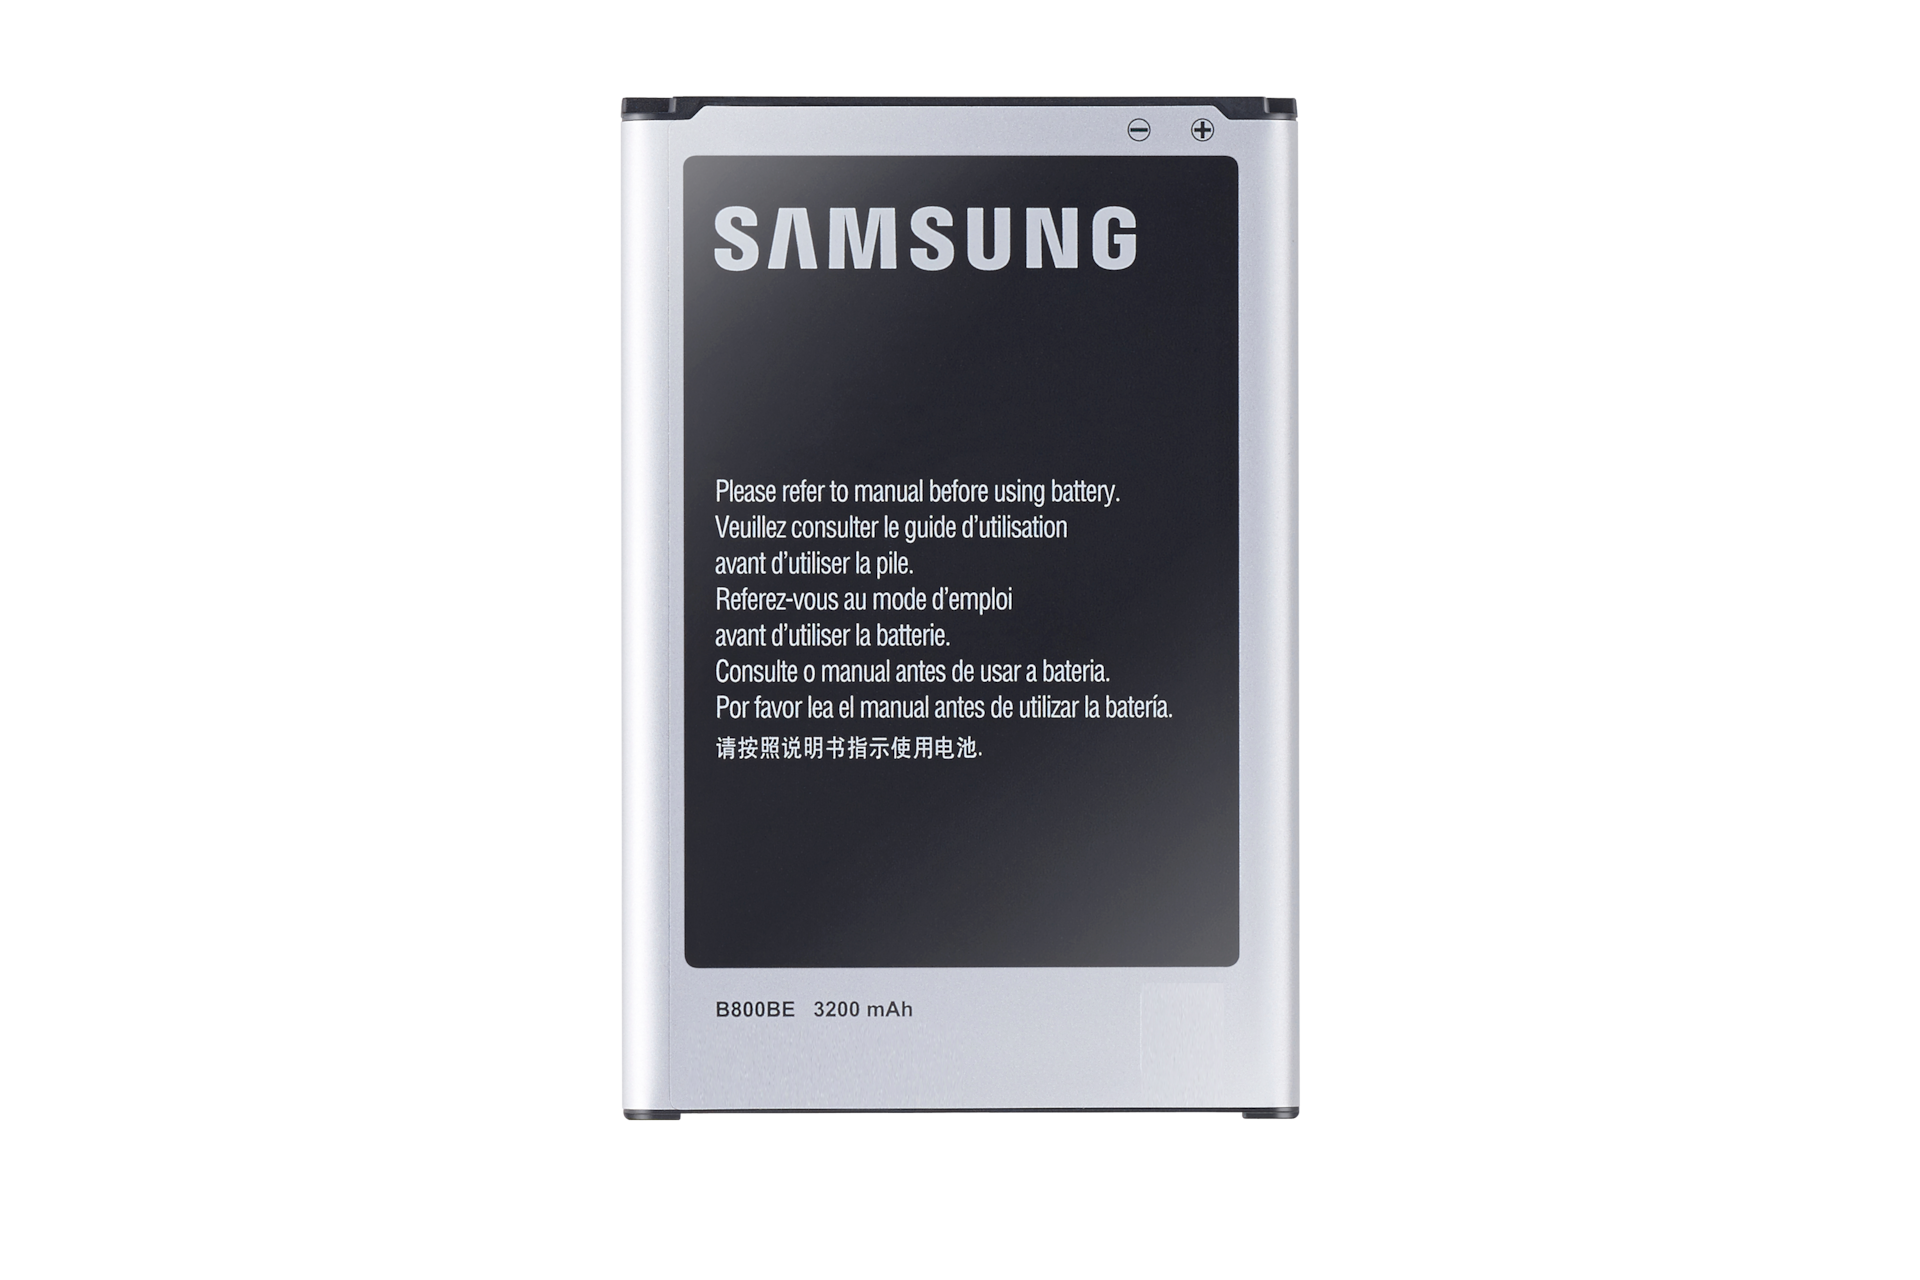 Galaxy Note 3 Battery - 3200mAh - Lithium-Ion - Samsung UK